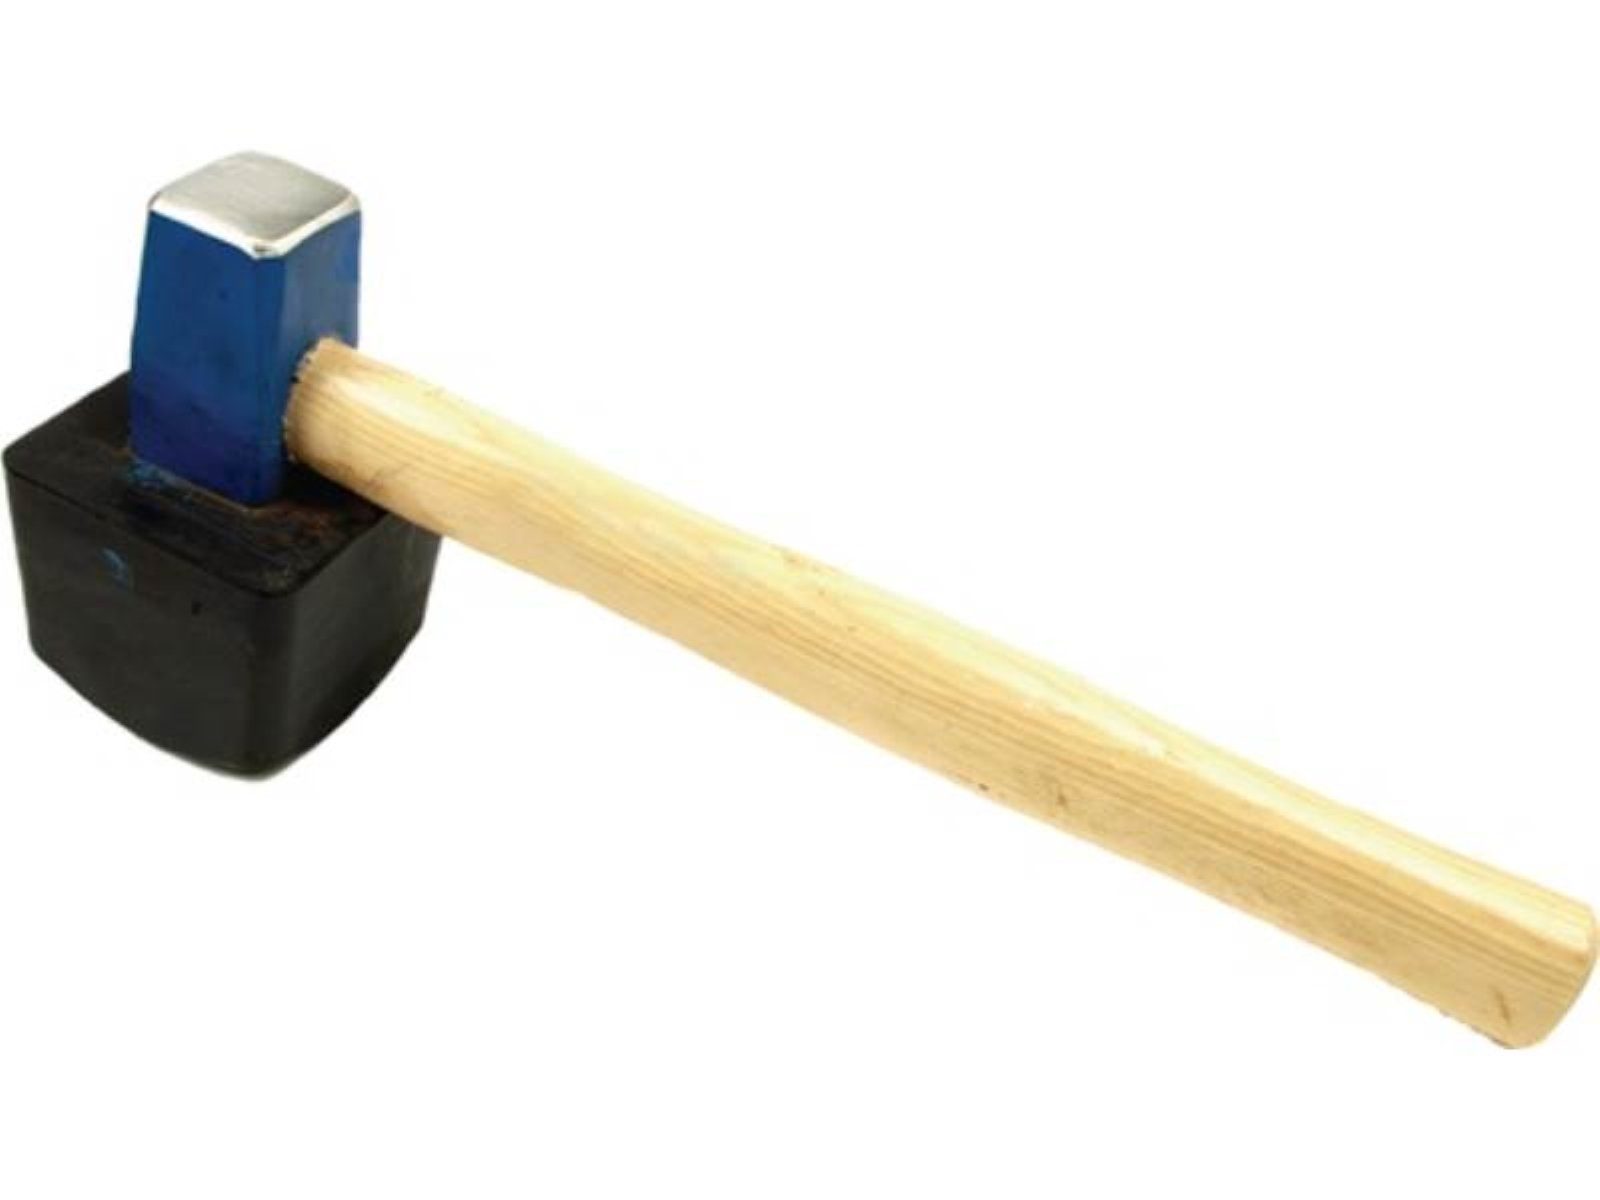 PROMAT Hammer Plattenlegerhammer 1500g eck.(anvulkanisiert) mit anvulkanisierten Gum